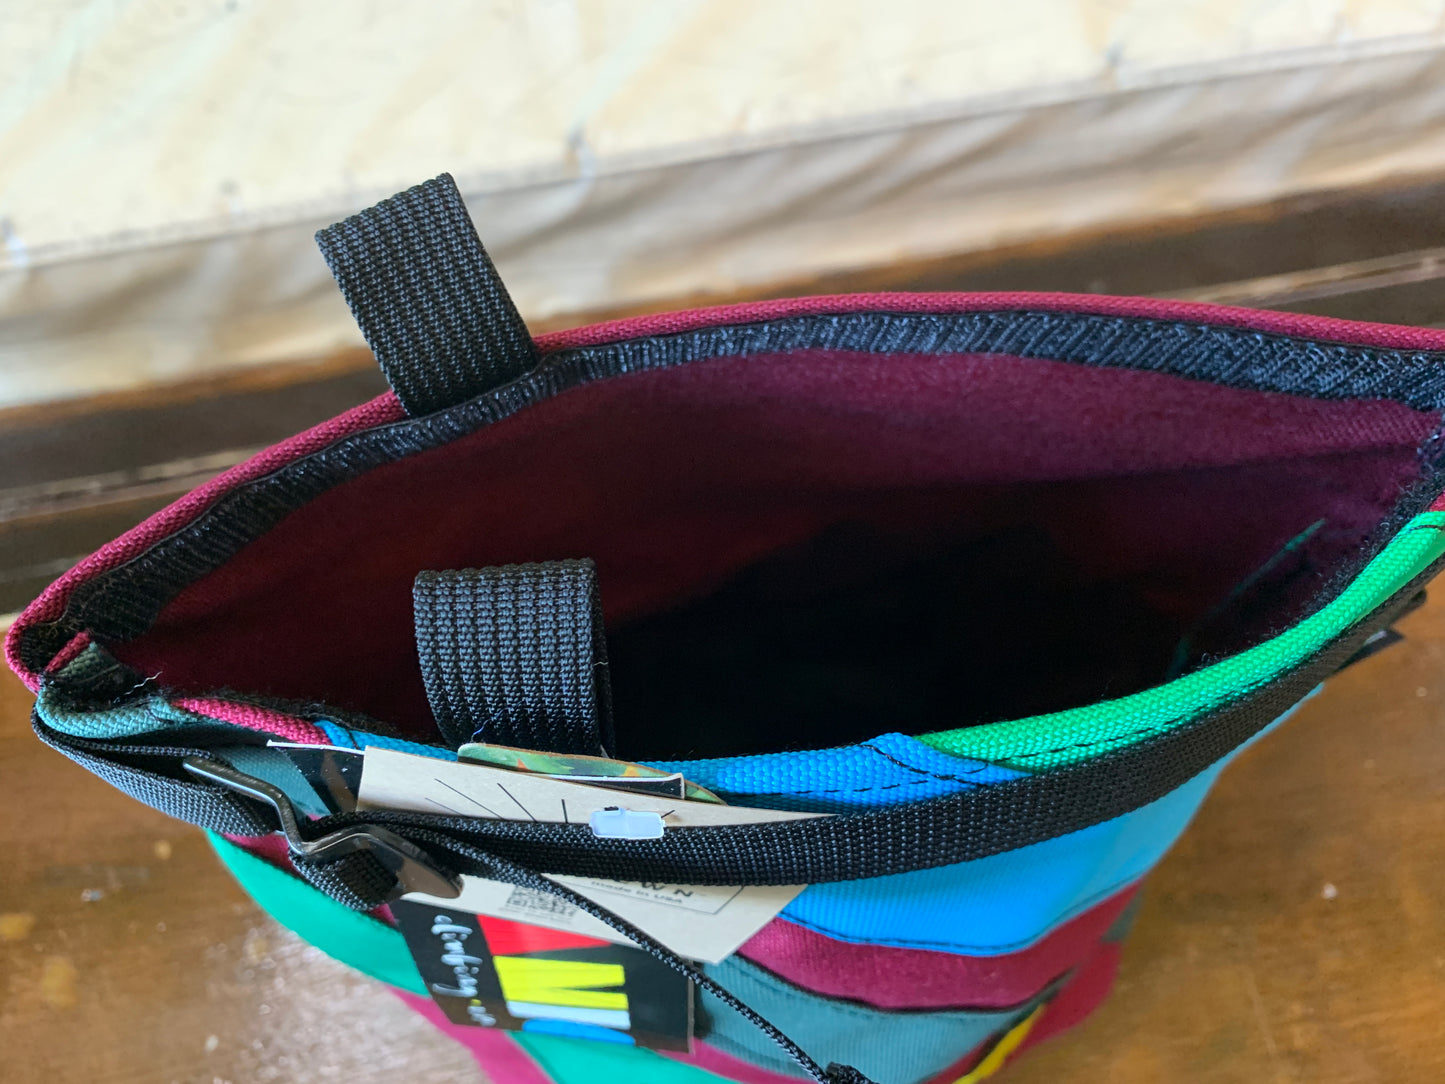 【ORGANIC】Lunch Bucket Chalk Bag【2】